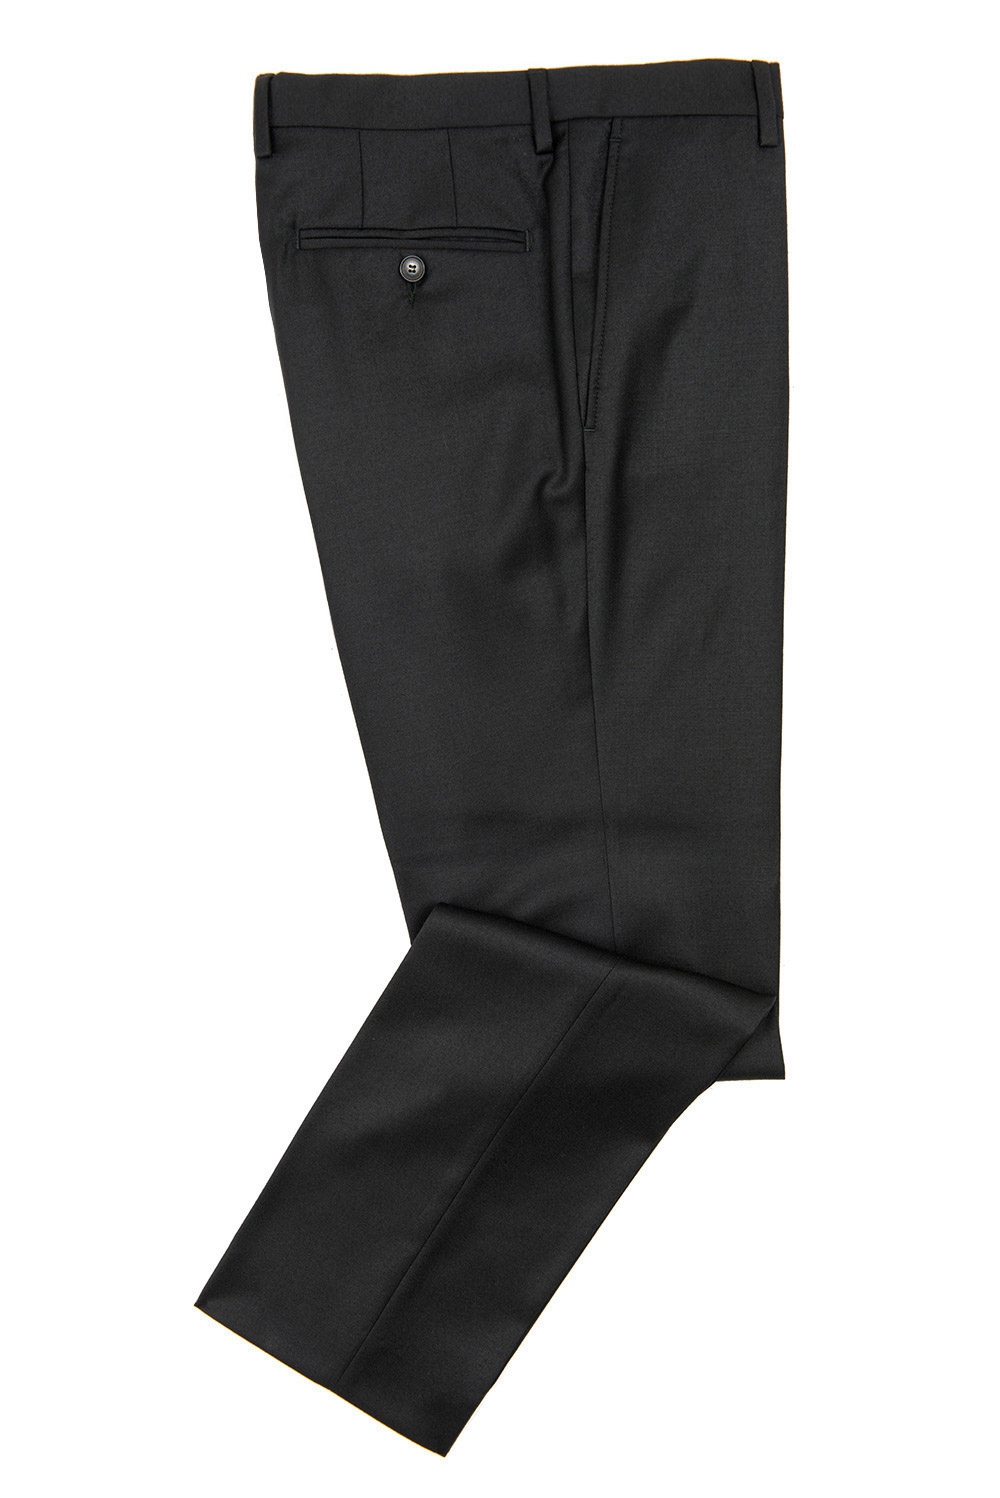 Pantaloni superslim fabian negru uni 1